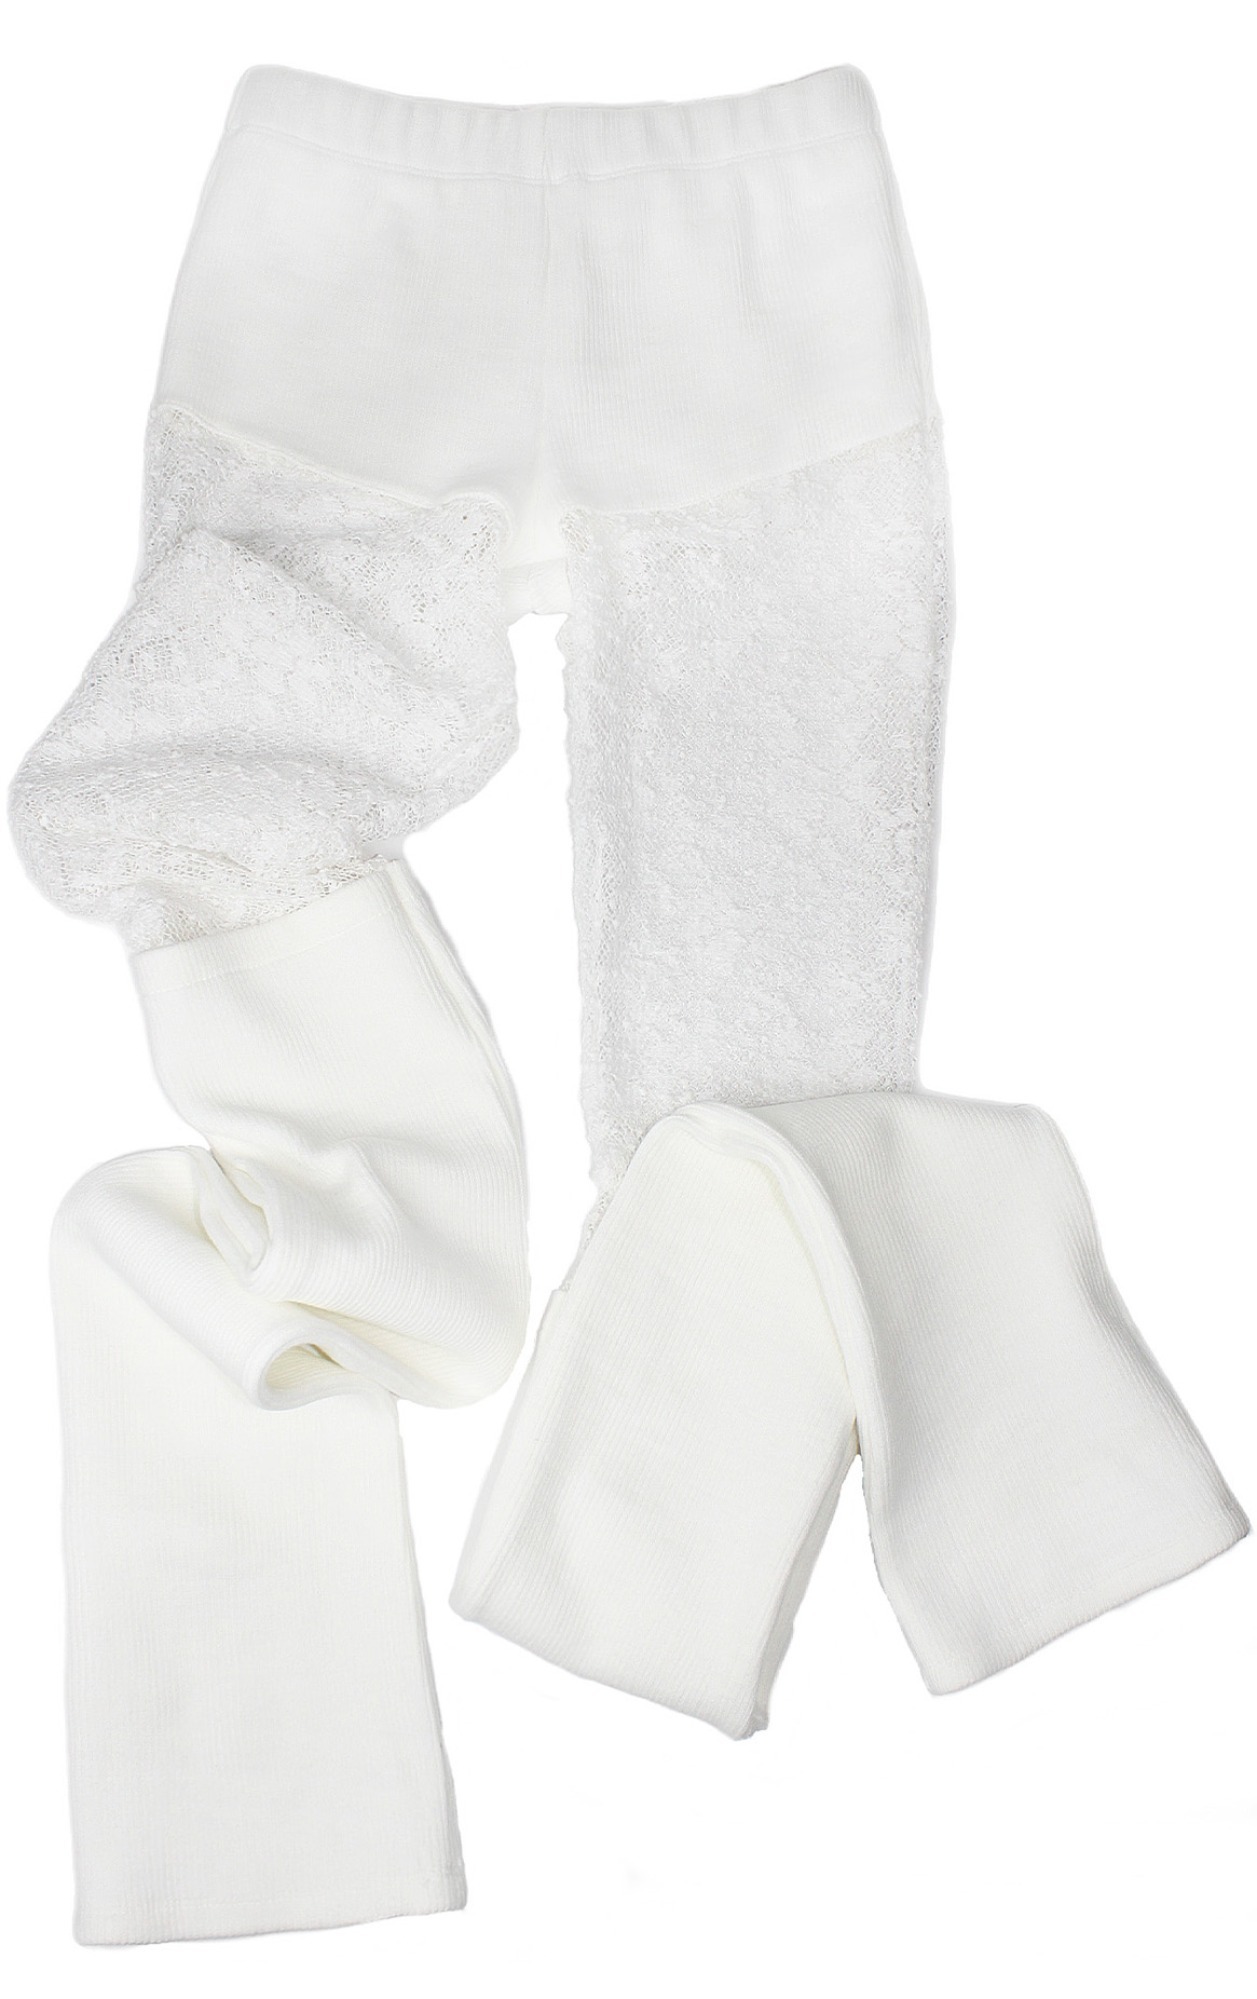 Lace loose socks leggings (White)